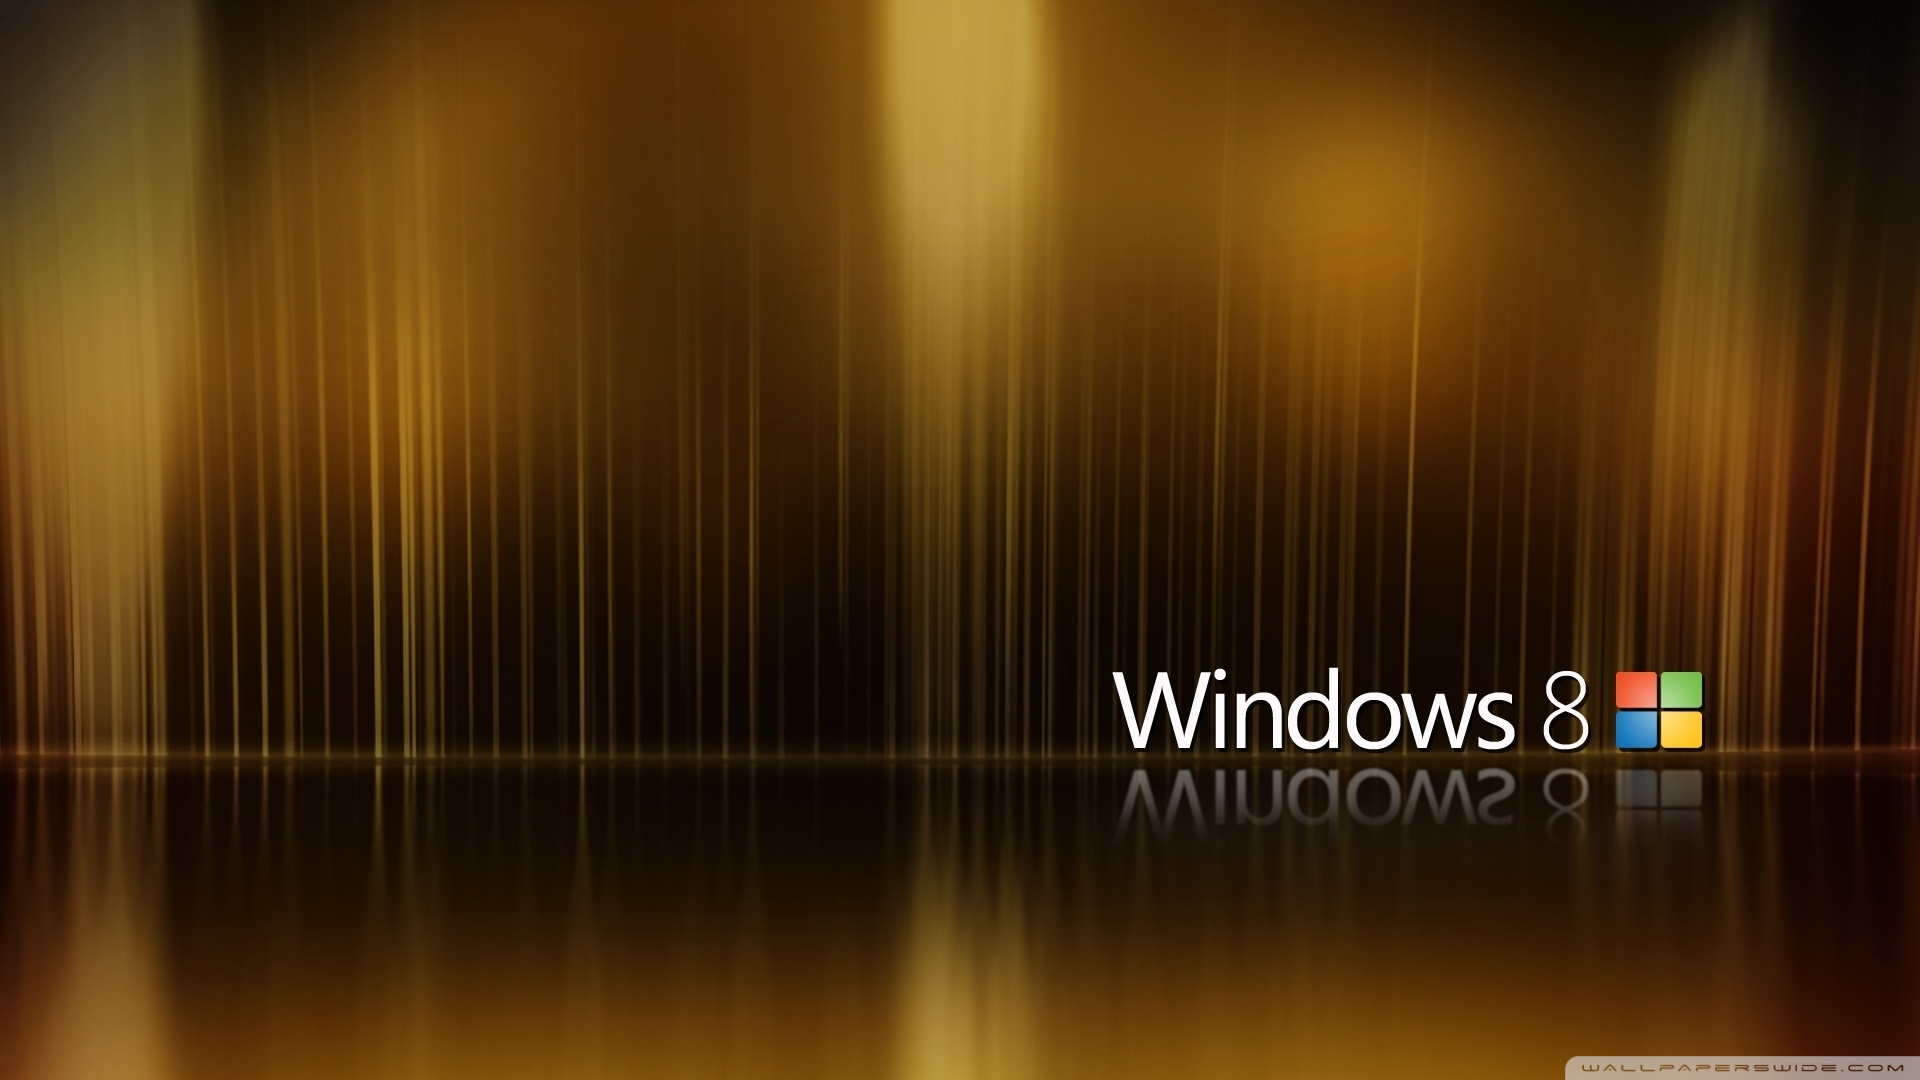 Windows 8 Ultra Hd Desktop Background Wallpaper For 4k Uhd Tv Tablet Smartphone